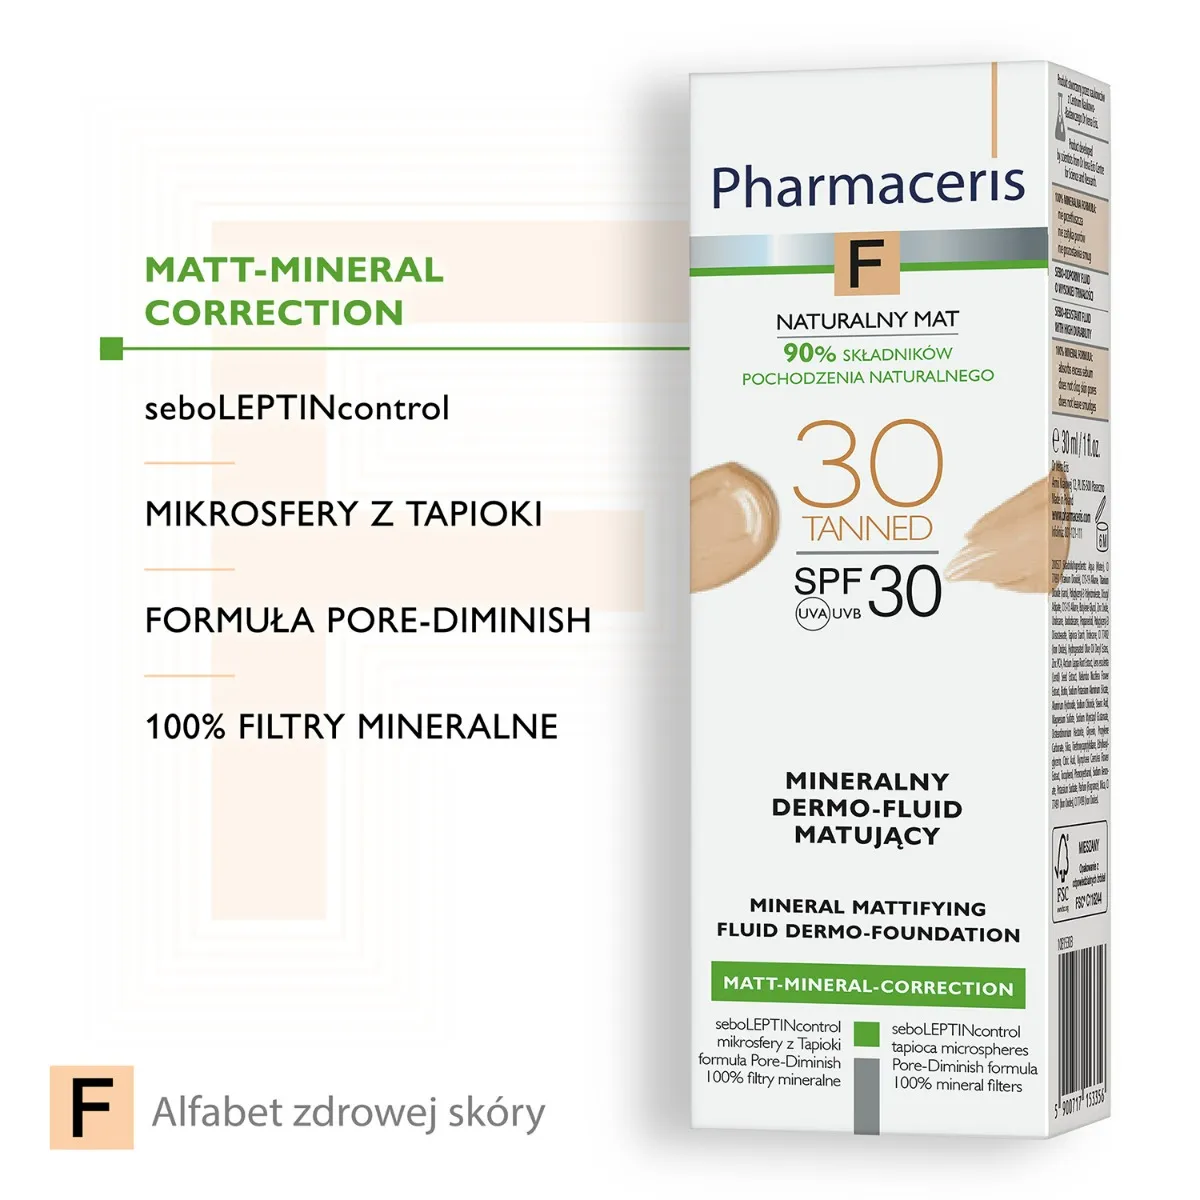 Pharmaceris F Matt-Mineral-Correction, mineralny dermo-fluid matujący, Spf 30, tanned 30, 40 ml 